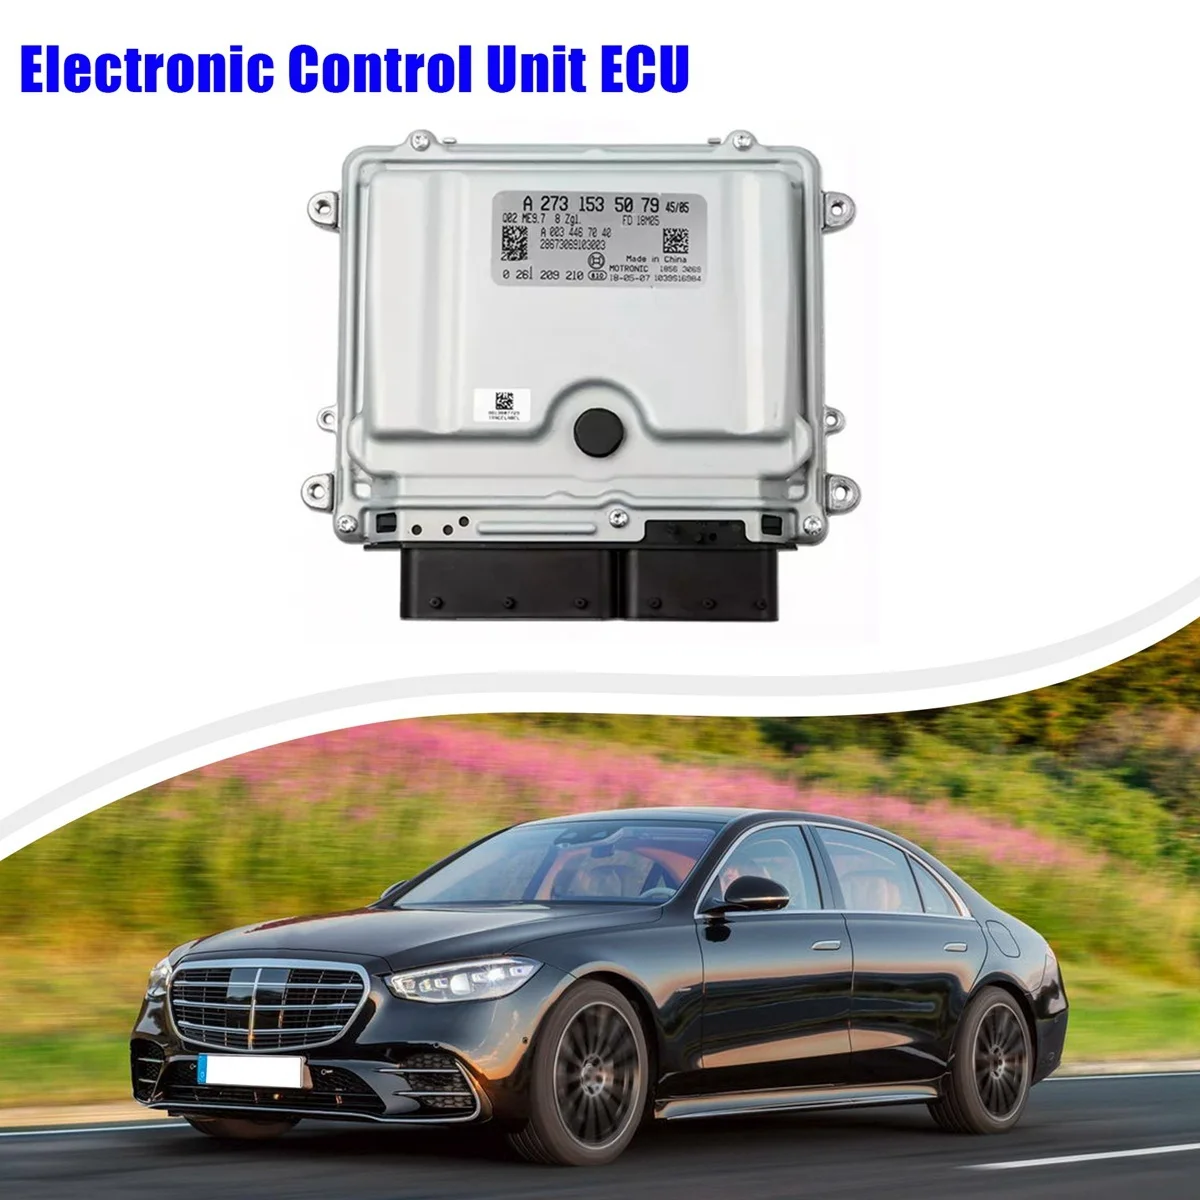 

A2731535079 Car Engine ECU Computer Board Electronic Control Unit ECU for Mercedes-Benz A2731533079 A2731536591